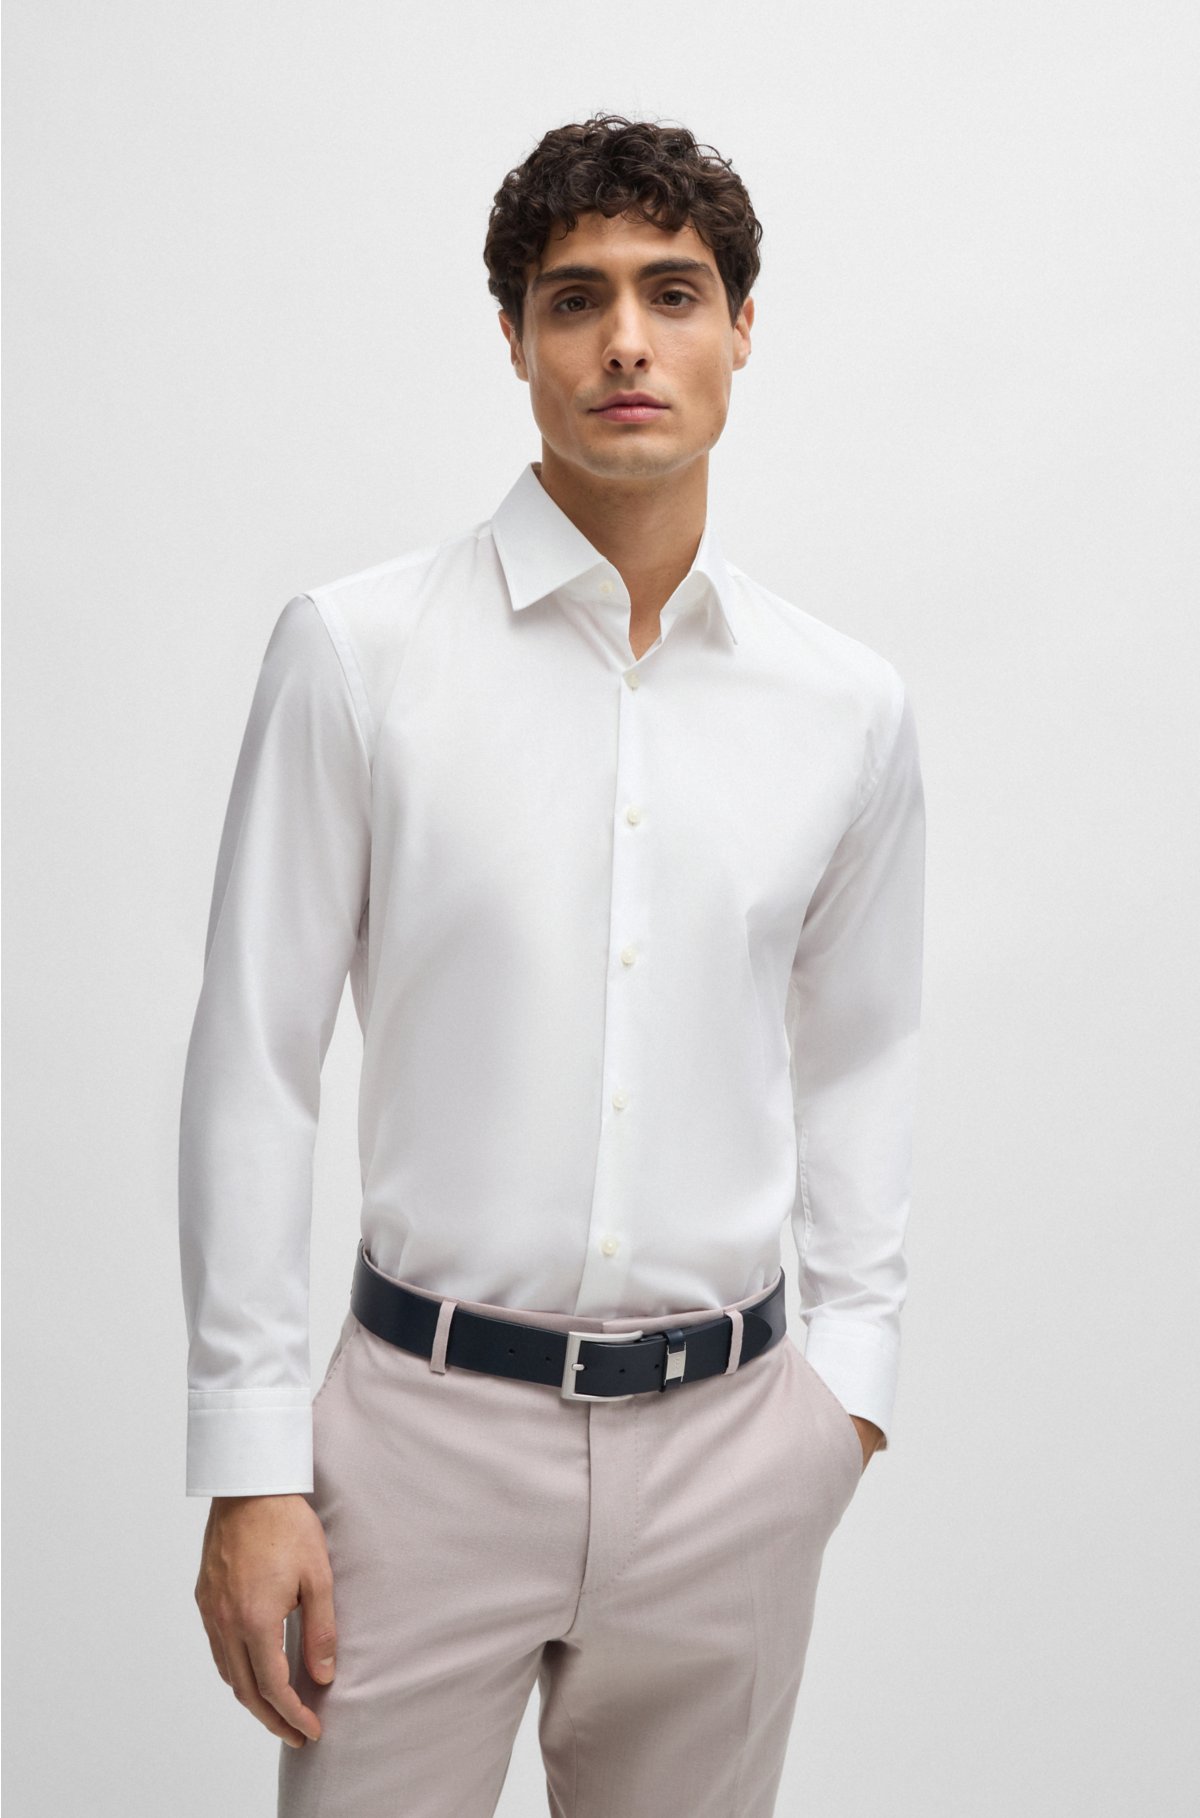 BOSS - shirt easy-iron in Slim-fit stretch-cotton poplin